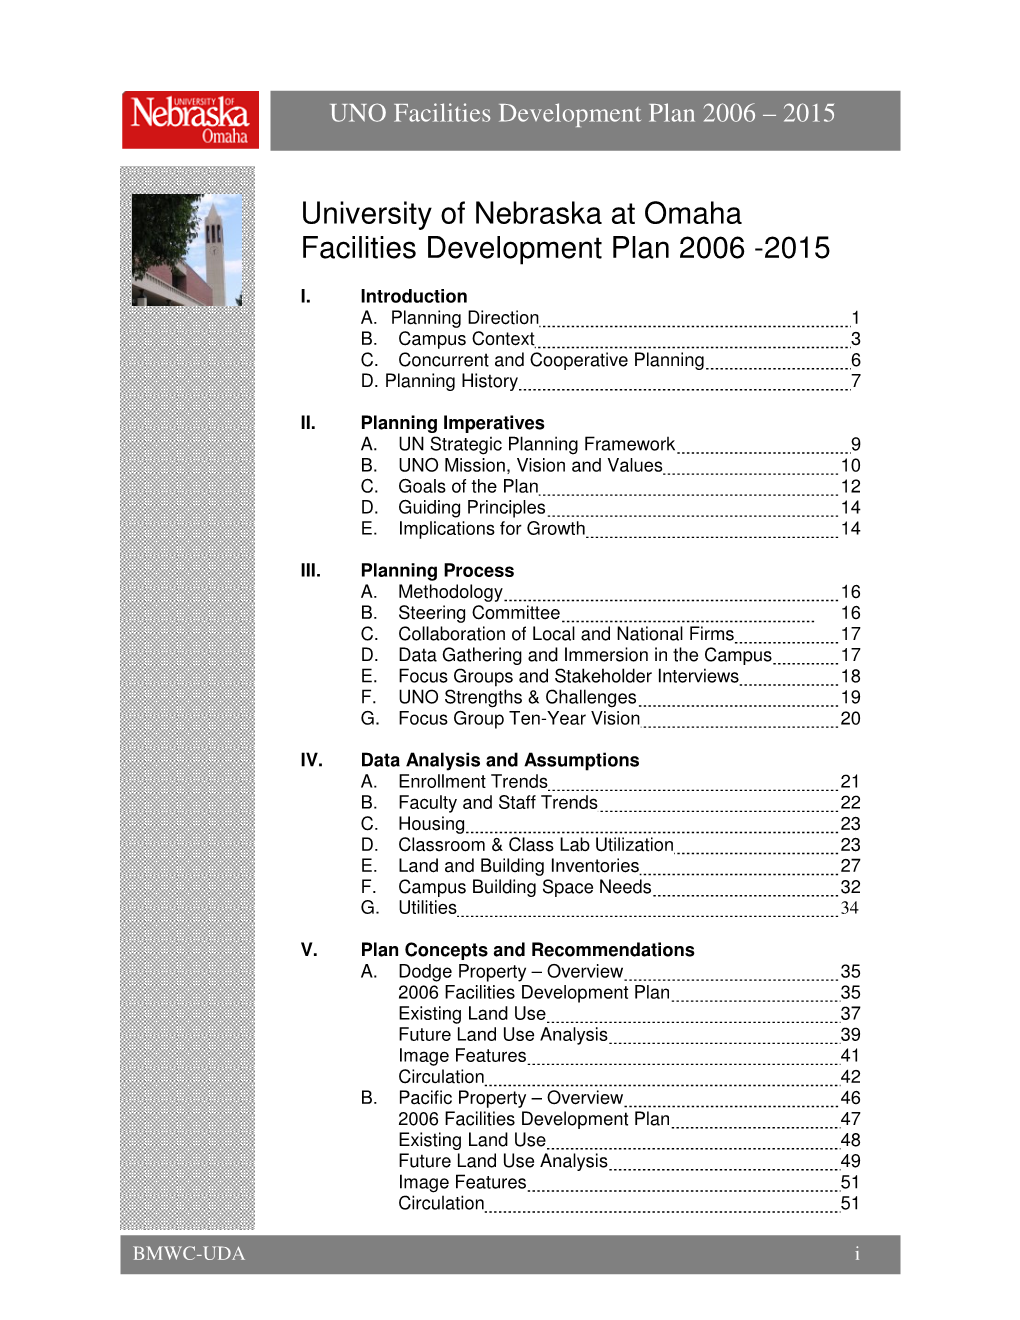 University of Nebraska at Omaha Facilities Development Plan 2006 -2015